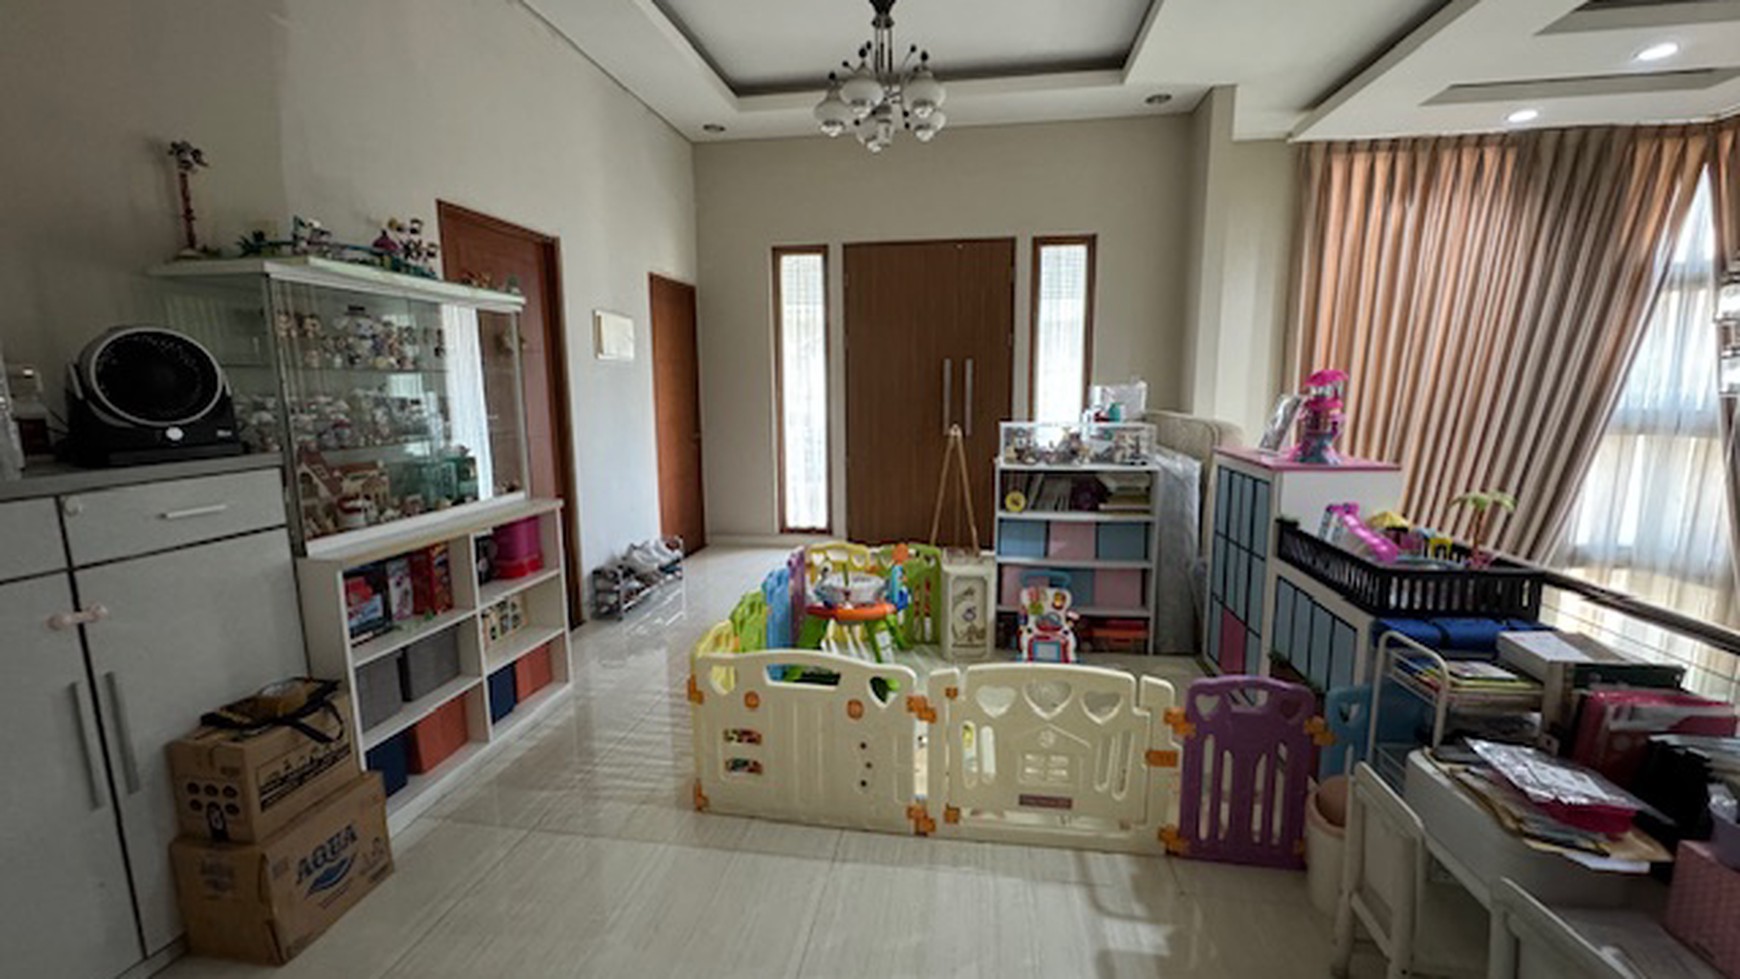 Rumah Bagus, Minimalis Jl Gedong, Mangga Besar Taman sari, Luas 251m2